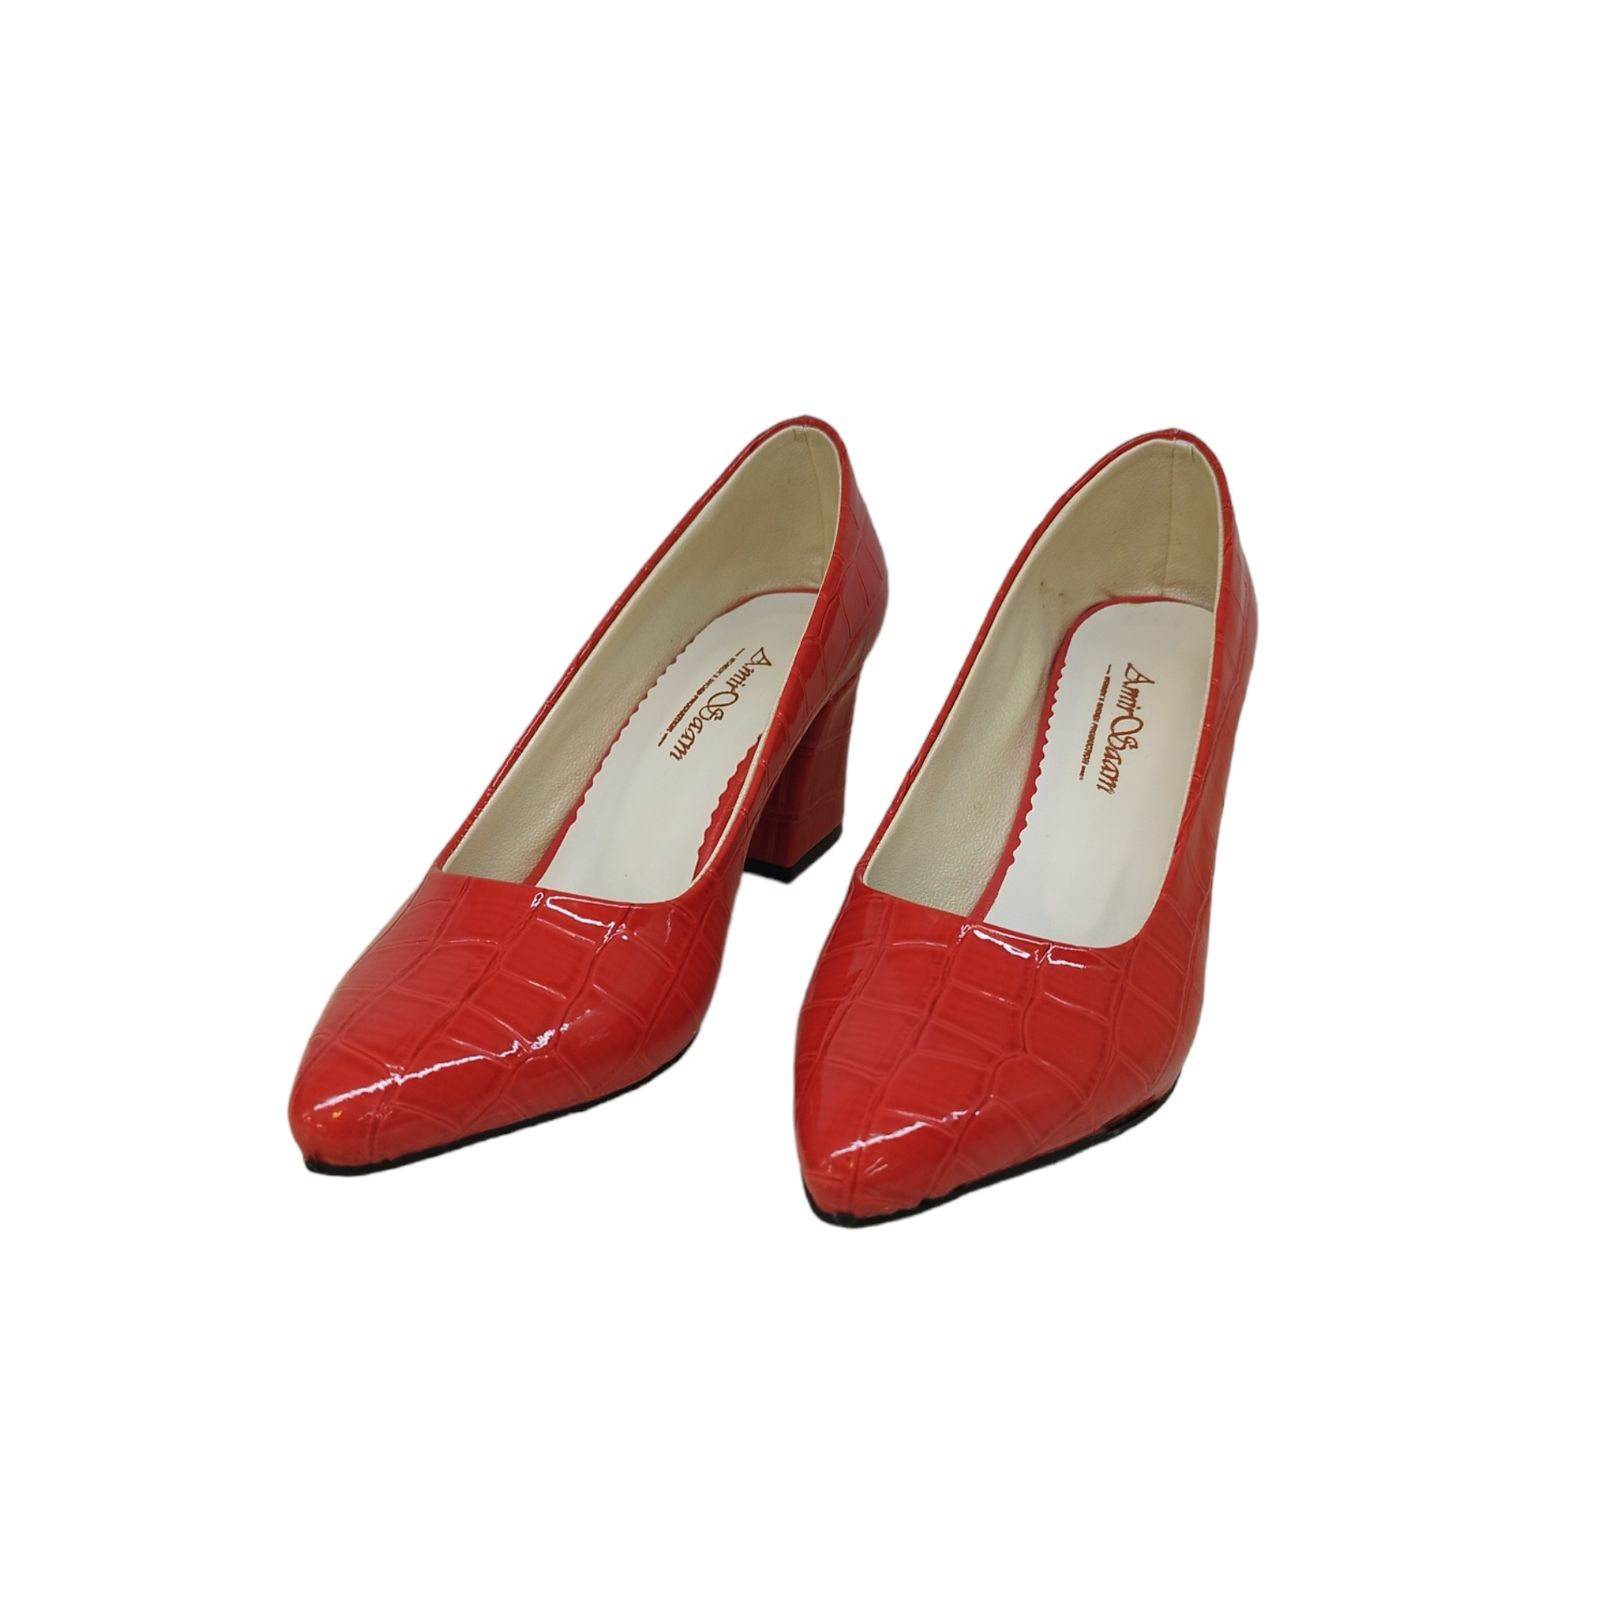 کفش زنانه مدل کروکودیلی 2 ورنی رنگ قرمز -  - 2